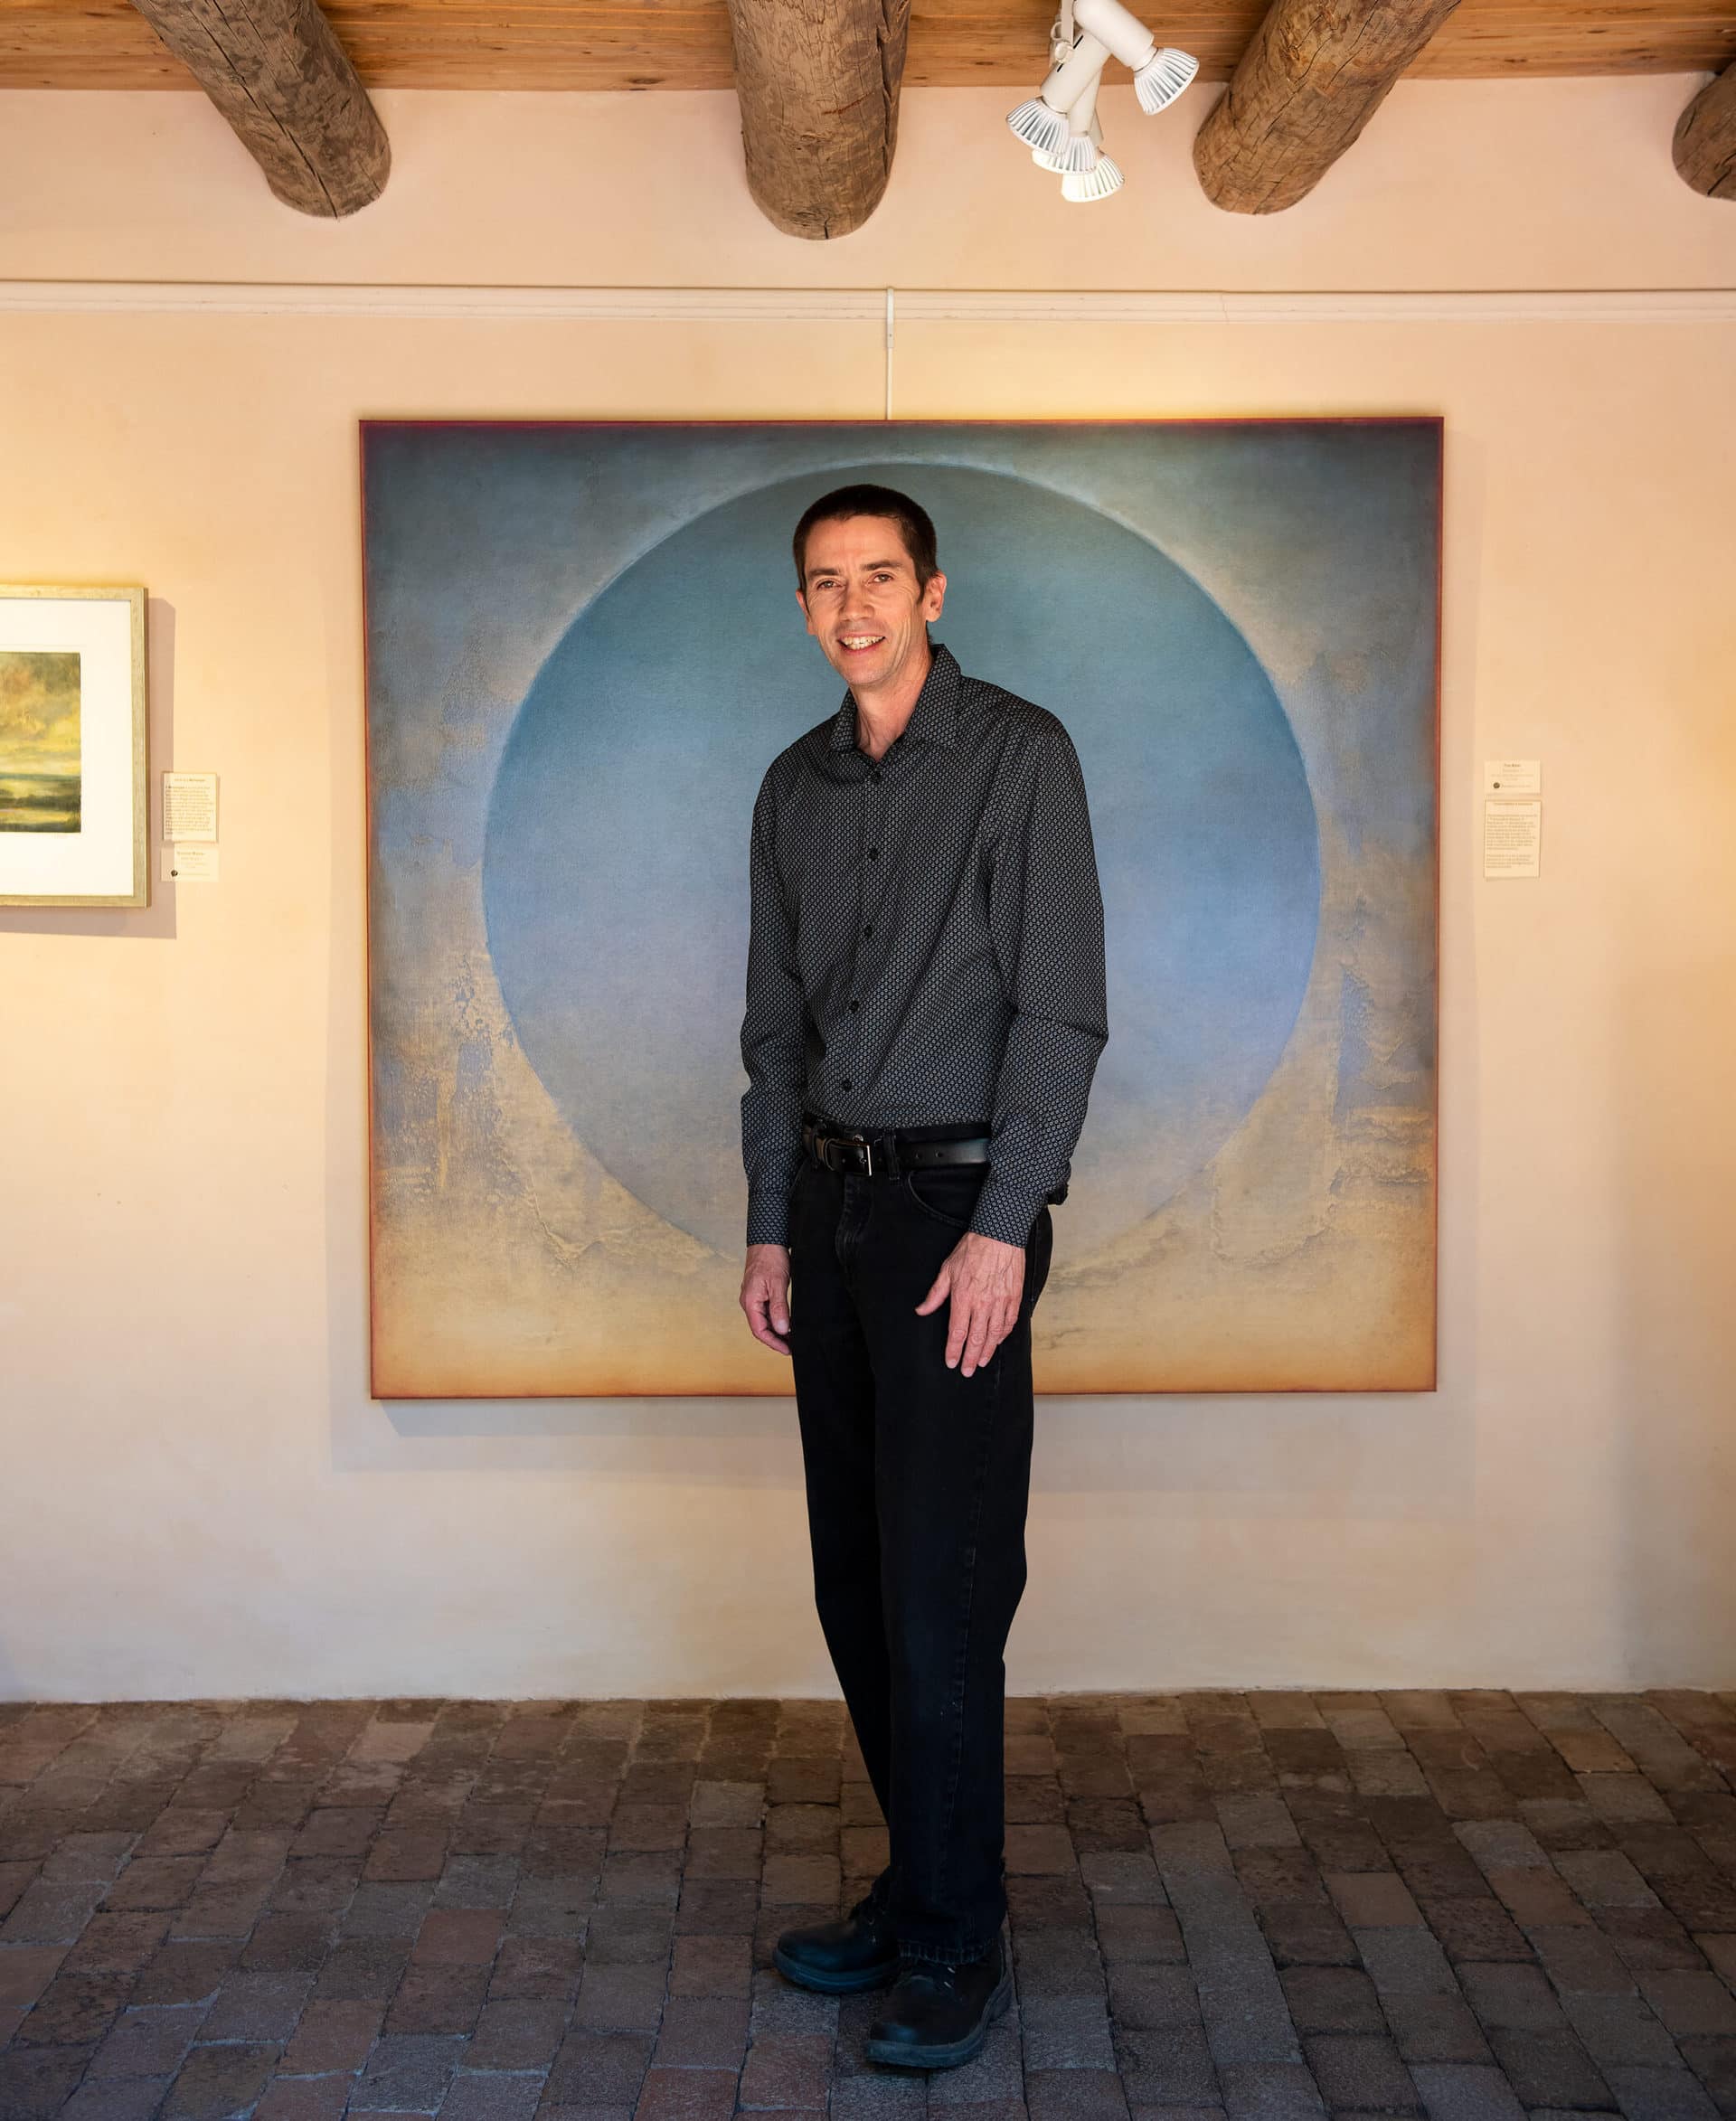 Tom Kirby at Winterowd Gallery, Canyon Road, Santa Fe, NM.